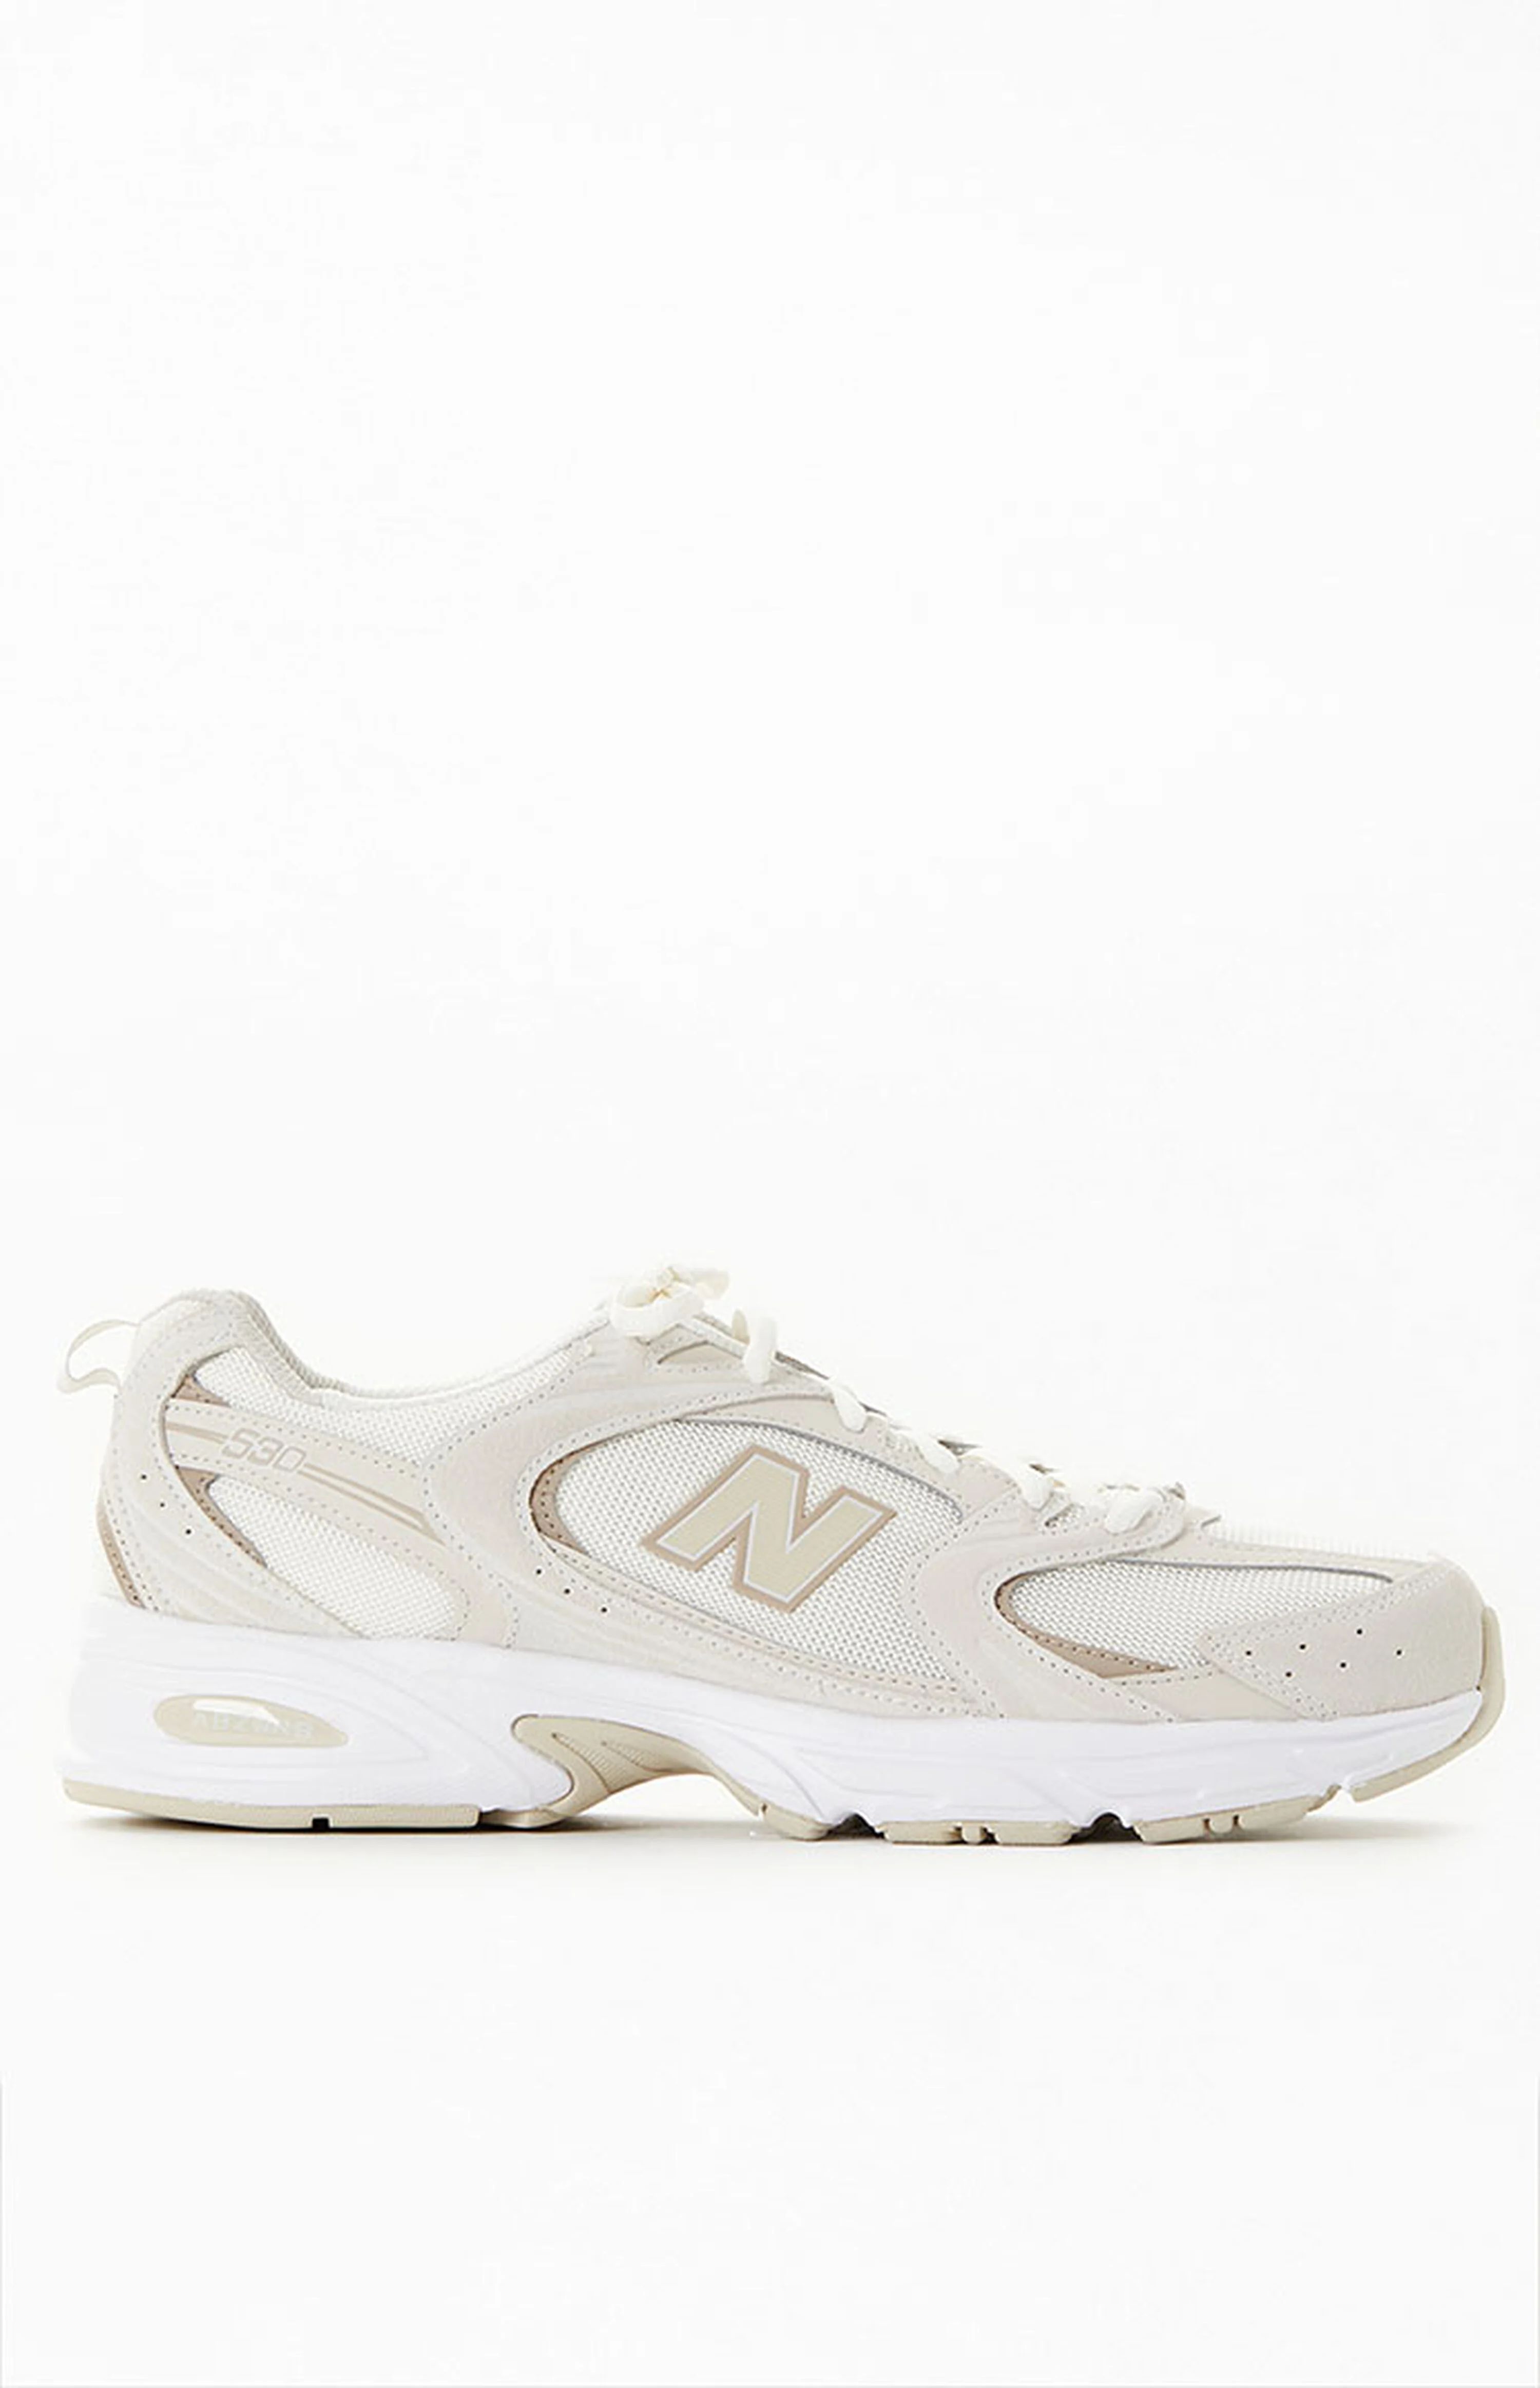 New Balance 530 Shoes | PacSun